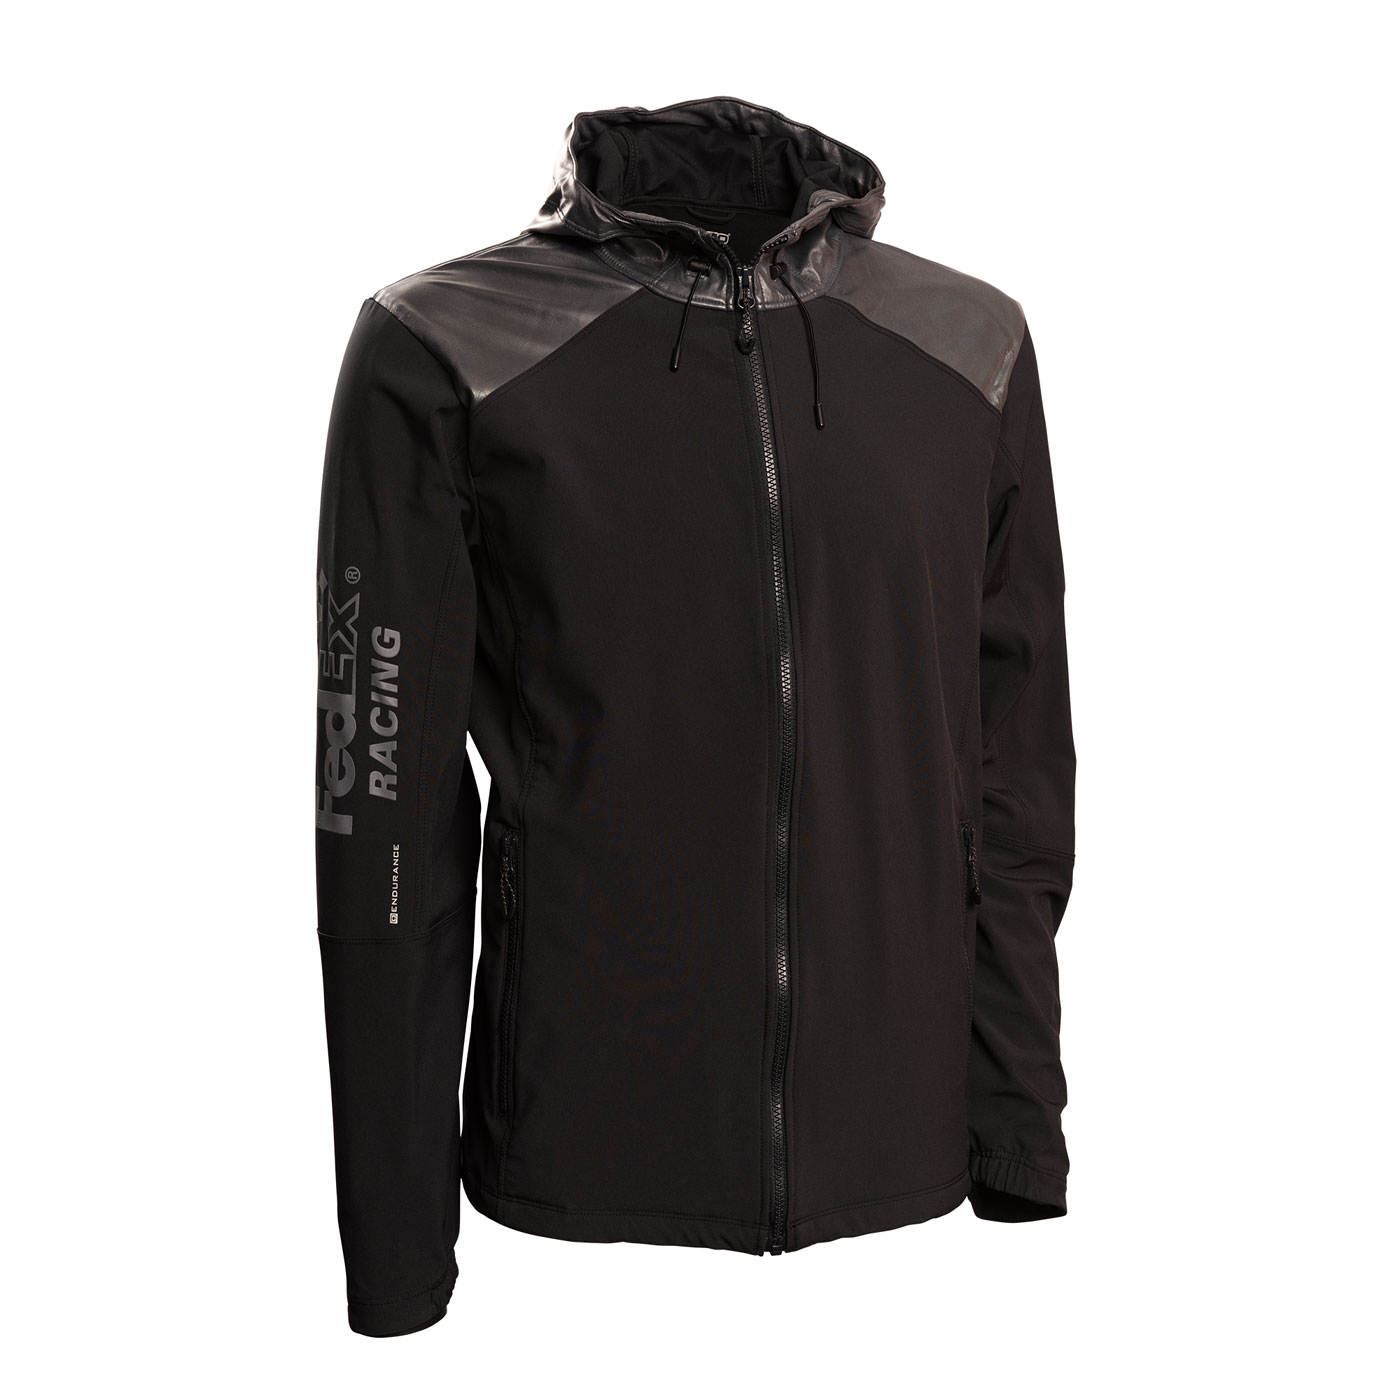 FedEx Racing OGIO® Halcyon Hooded Jacket | The FedEx Company Store